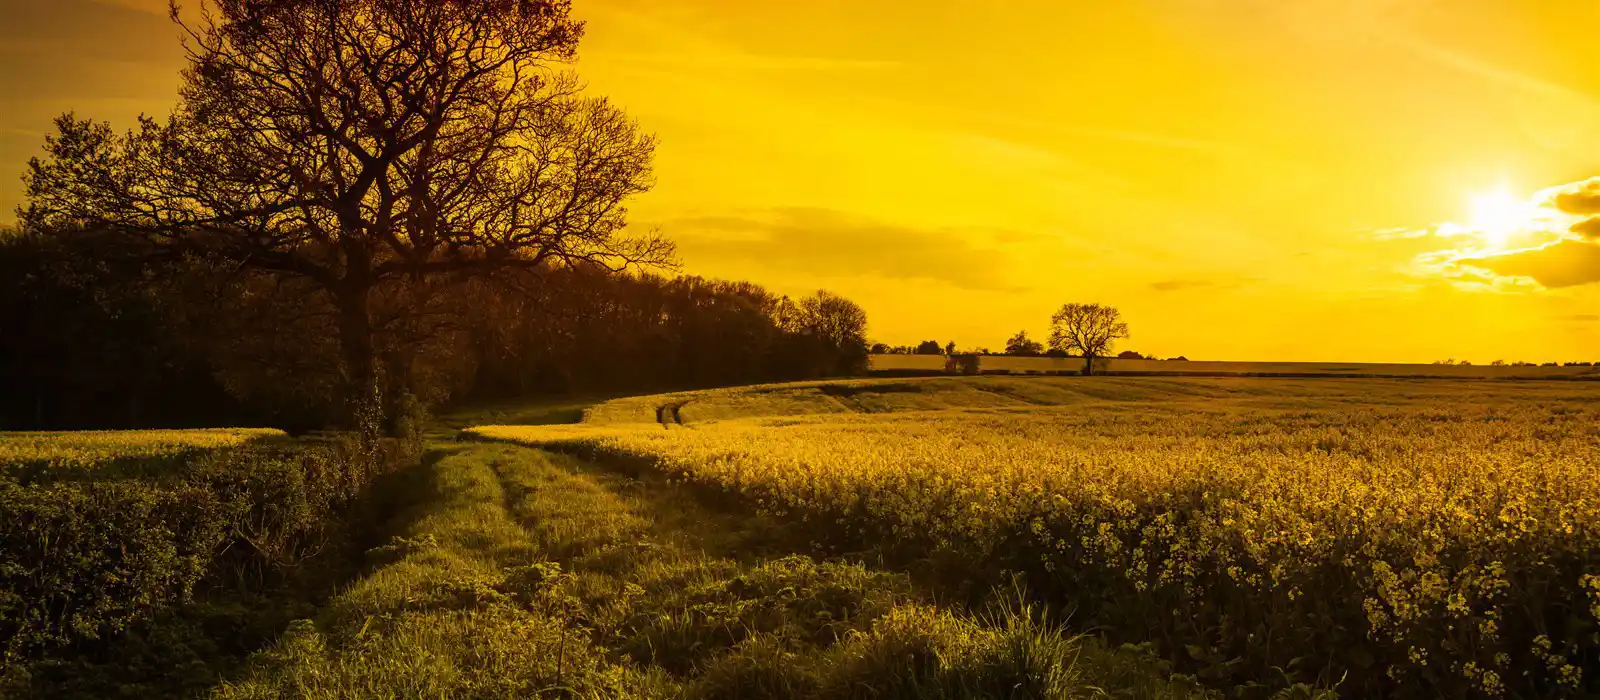 Canola field landscape in Shropshire, UK at sunset